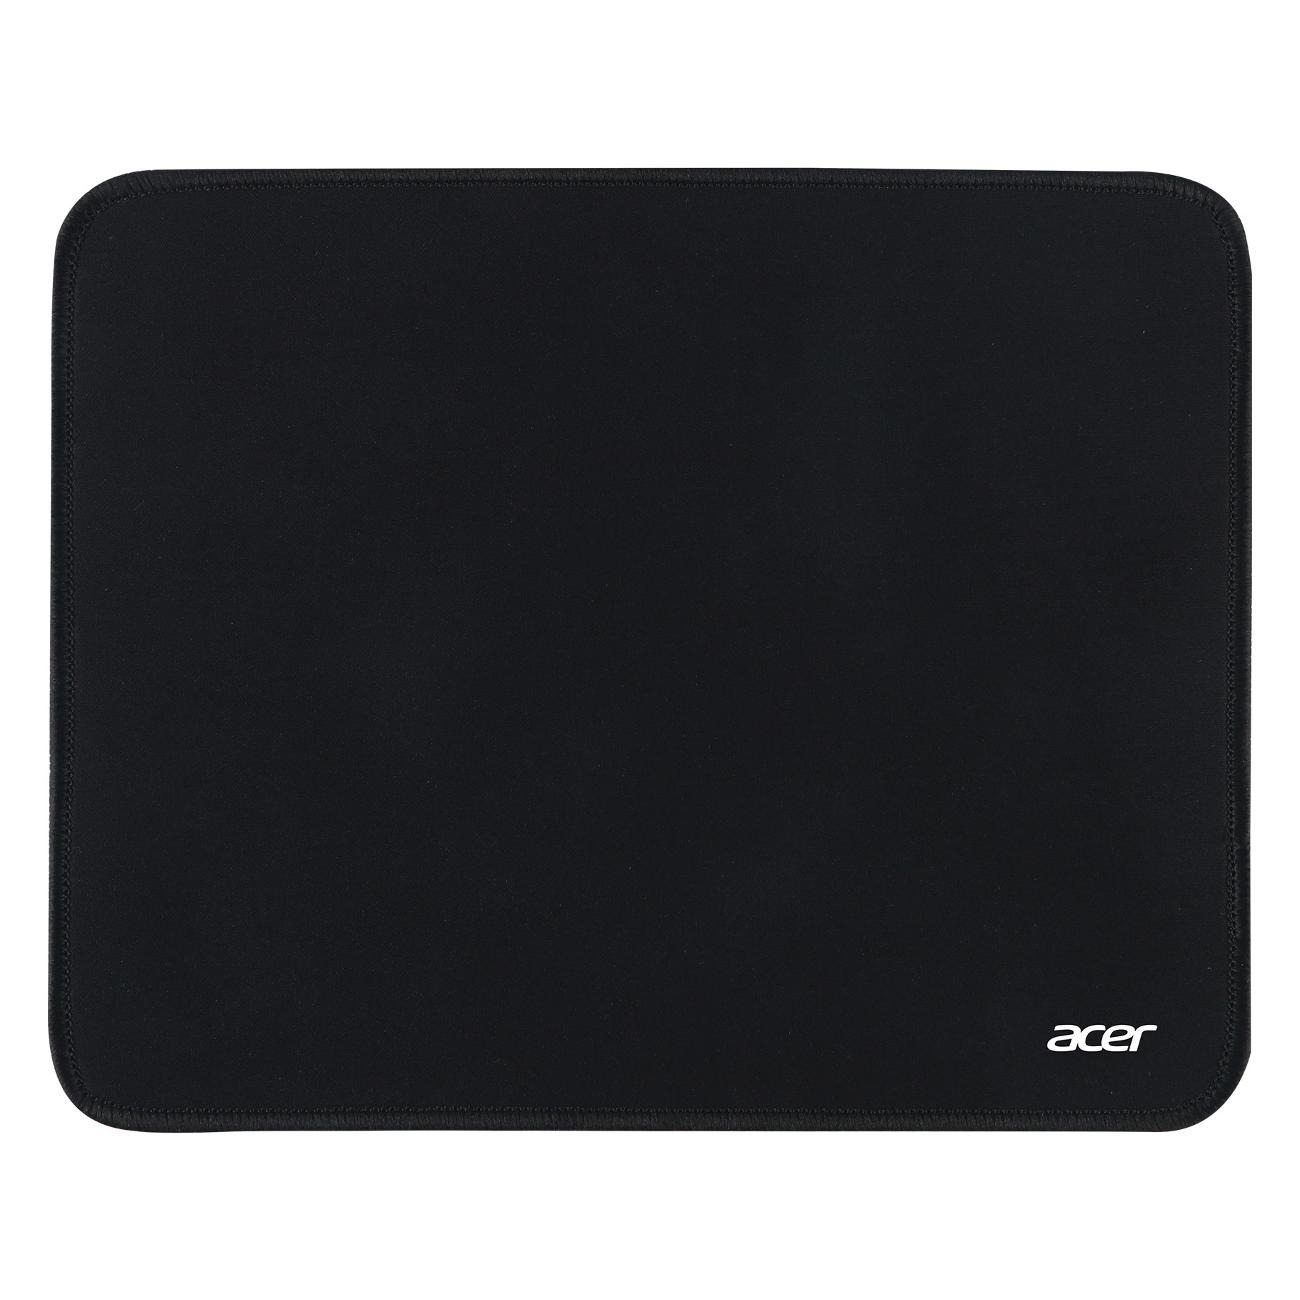 Коврик для мыши Acer omp211 черный 350x280x3мм (zl.mspee.002)